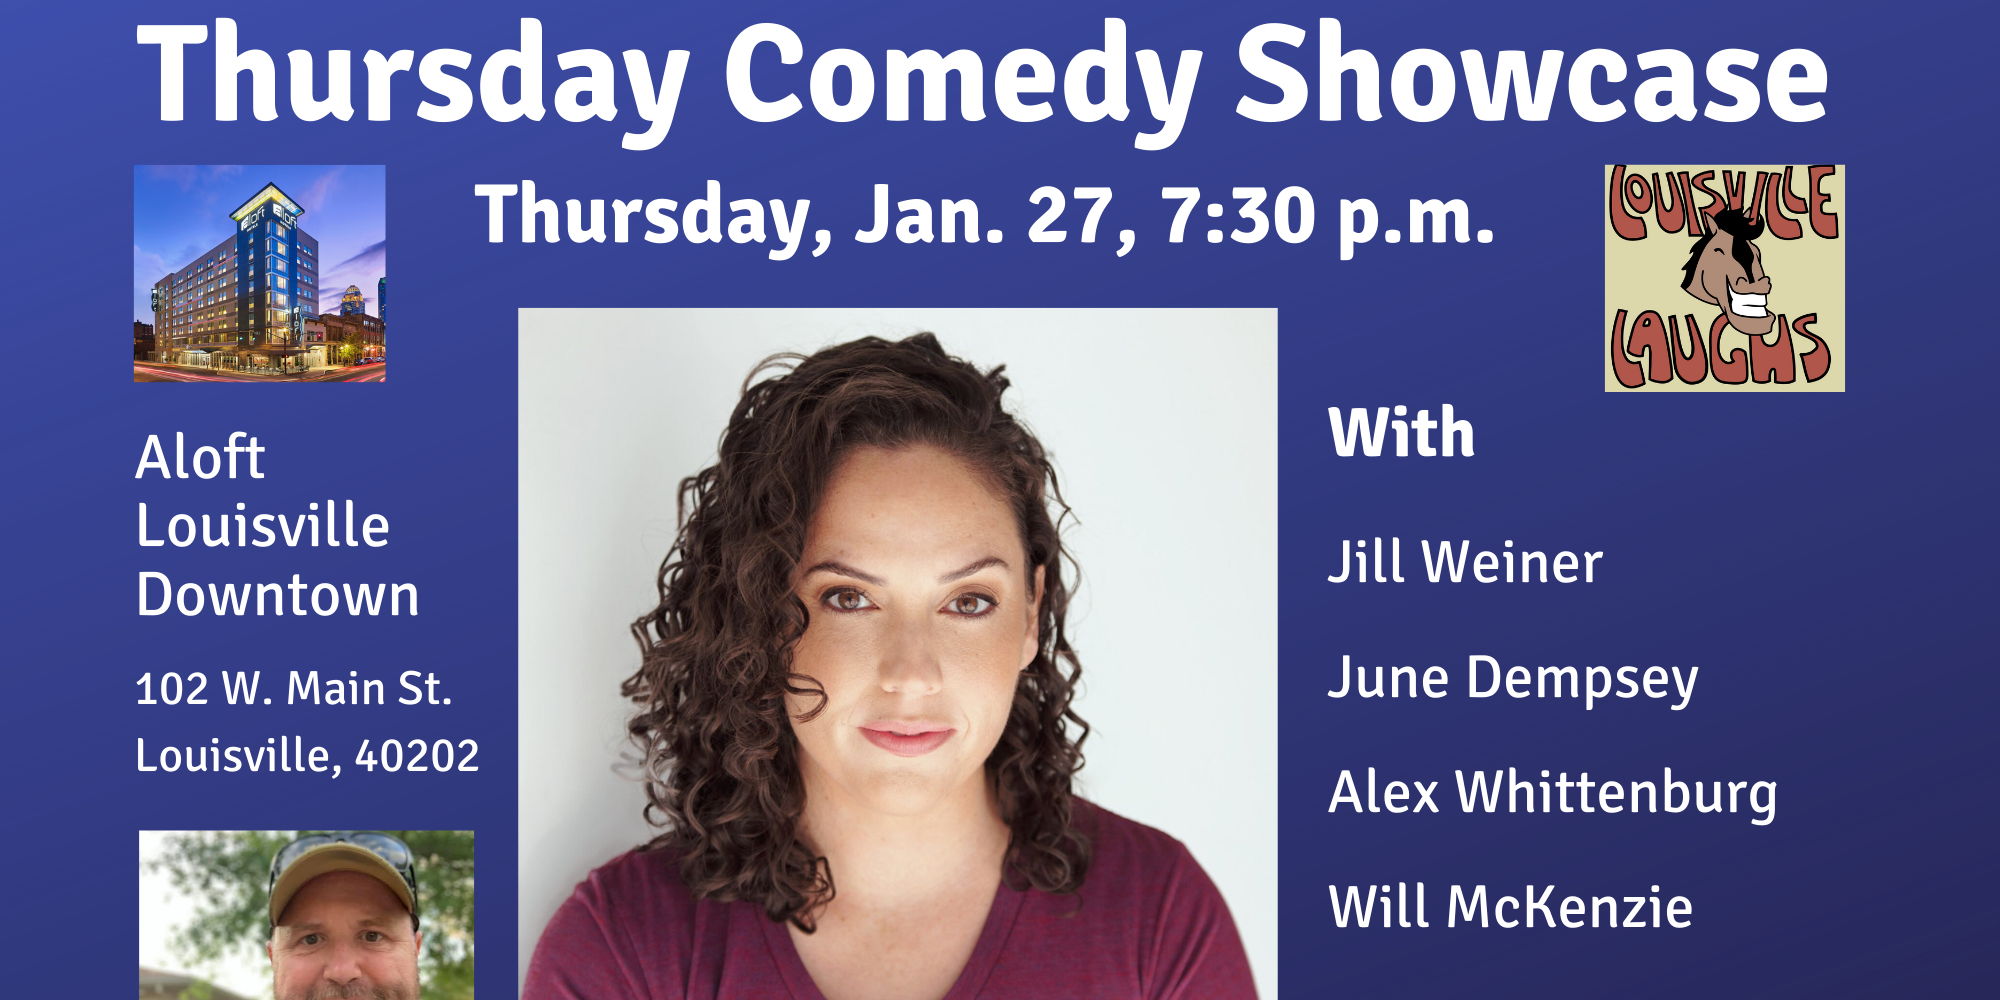 Jan. 27 Thursday Comedy Showcase promotional image